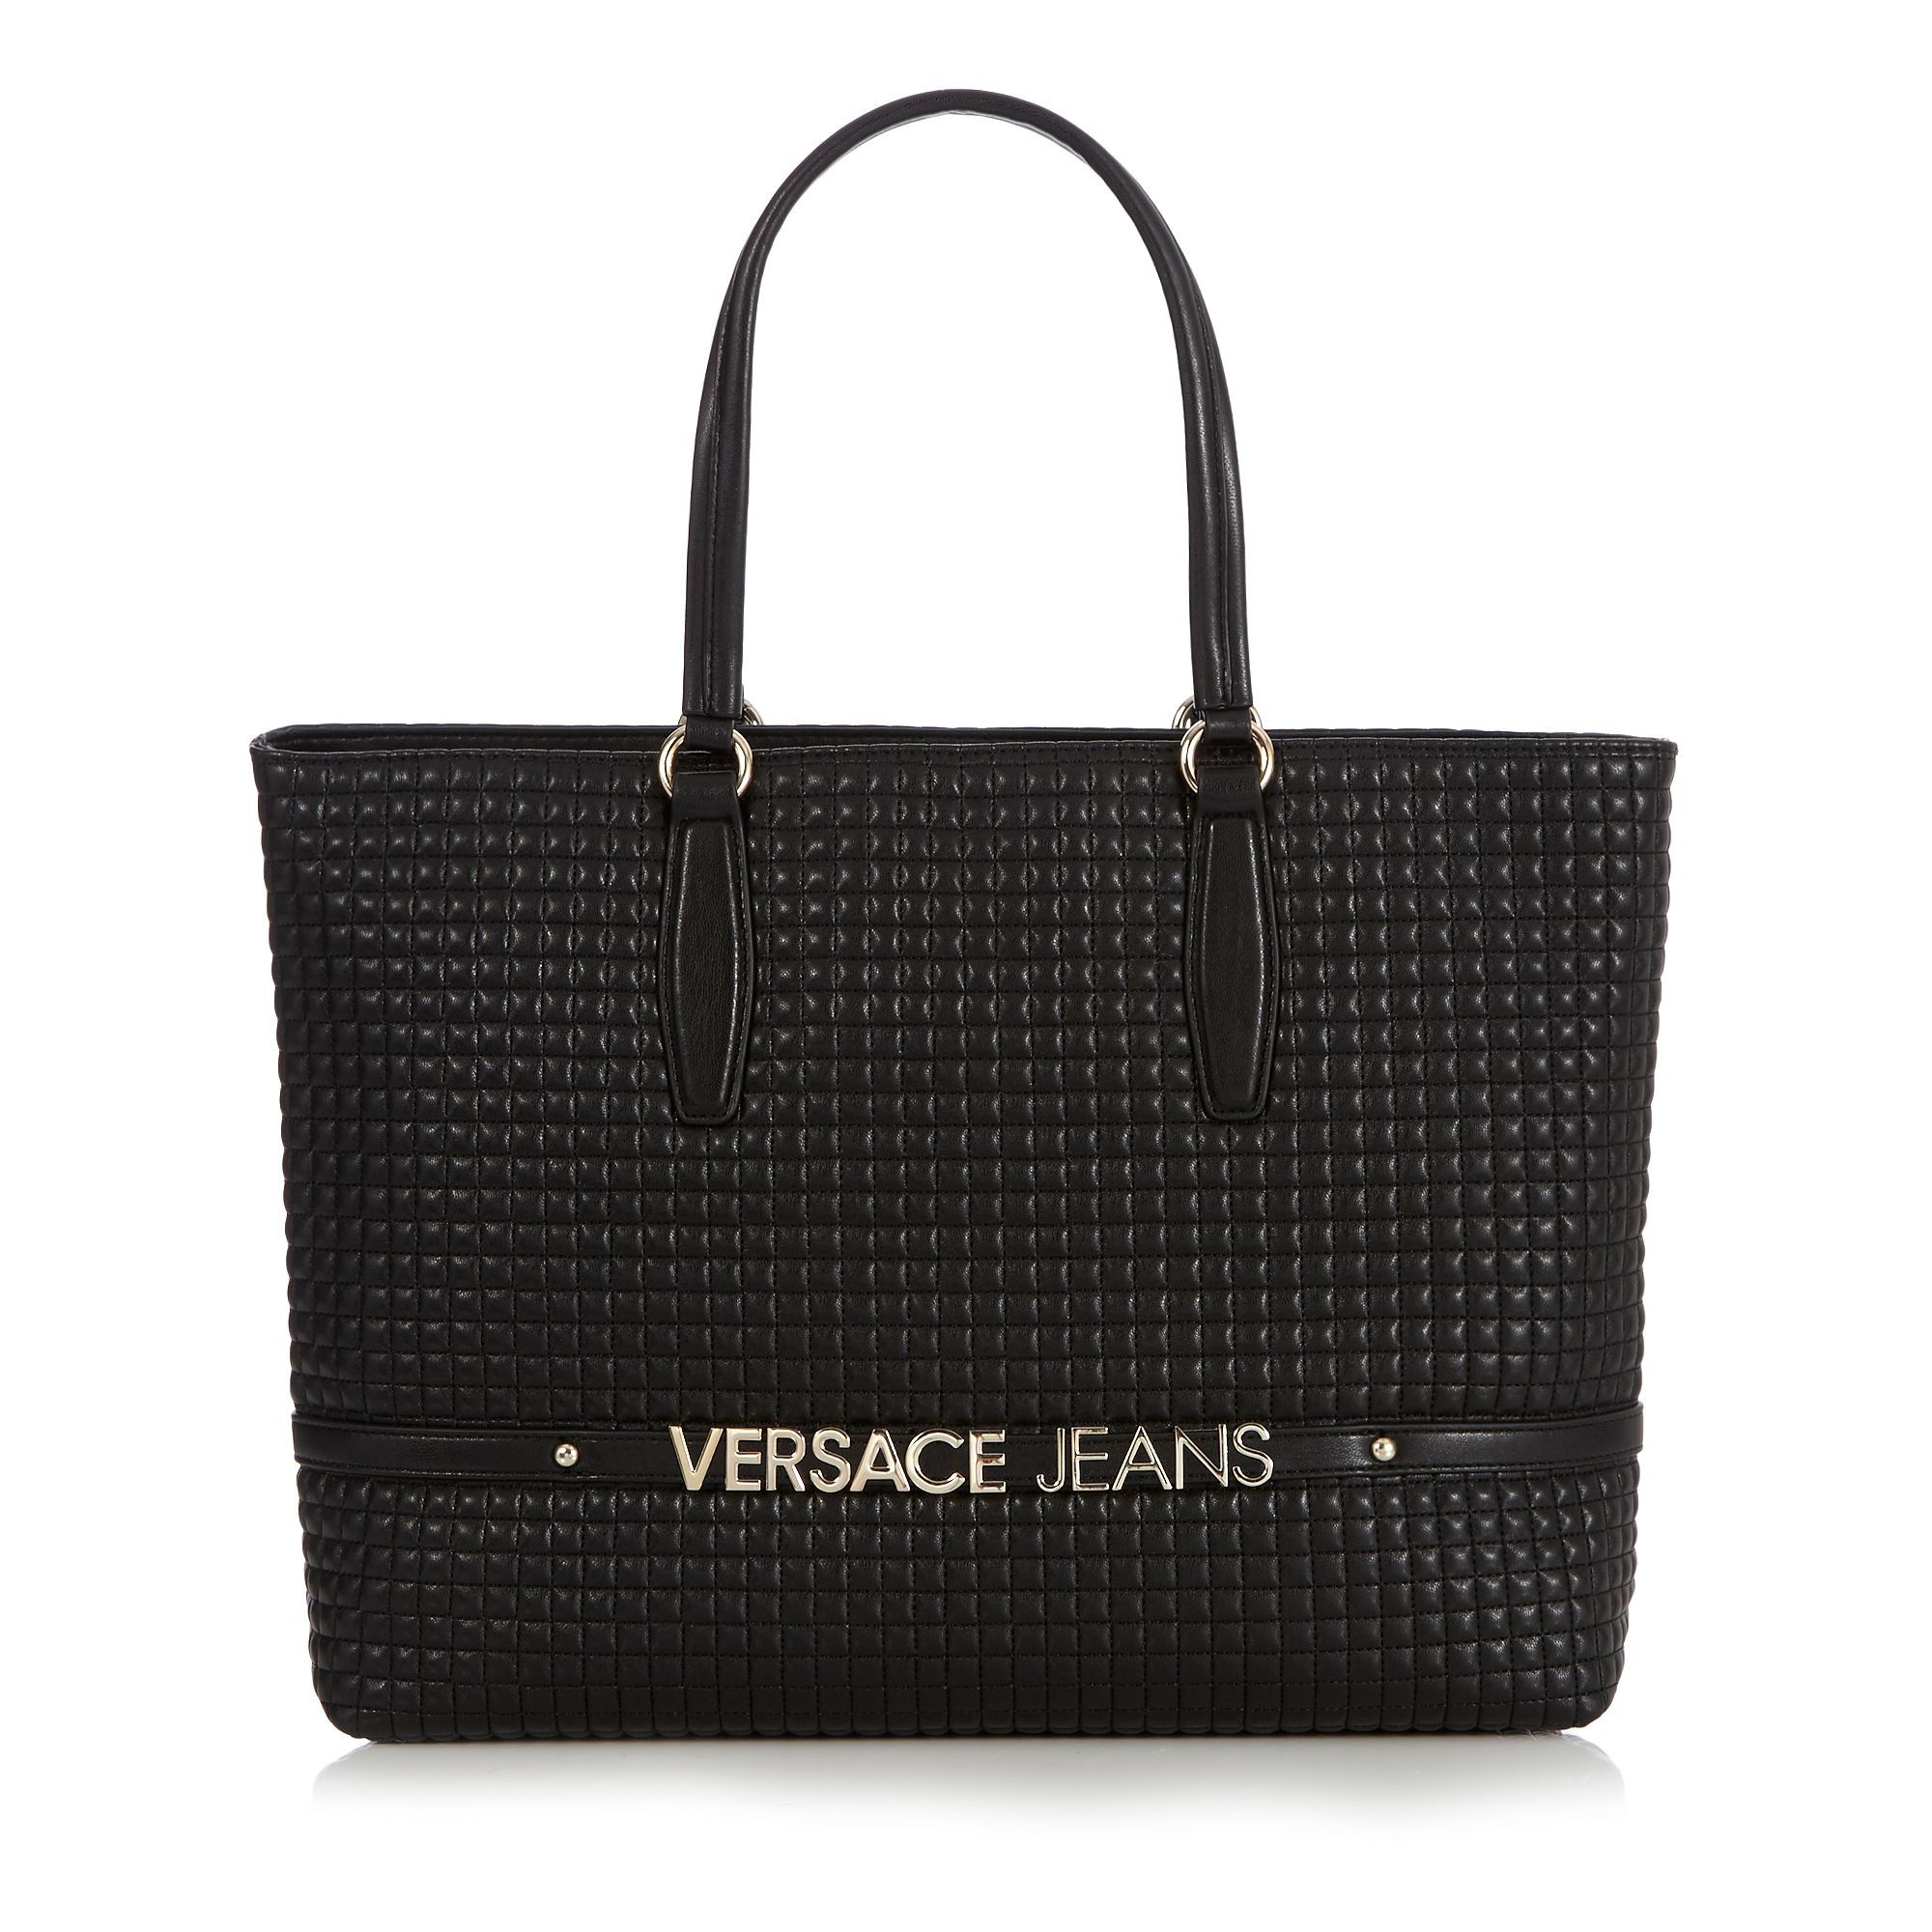 Versace Jeans Womens Black Quilted Shopper Bag From Debenhams | eBay